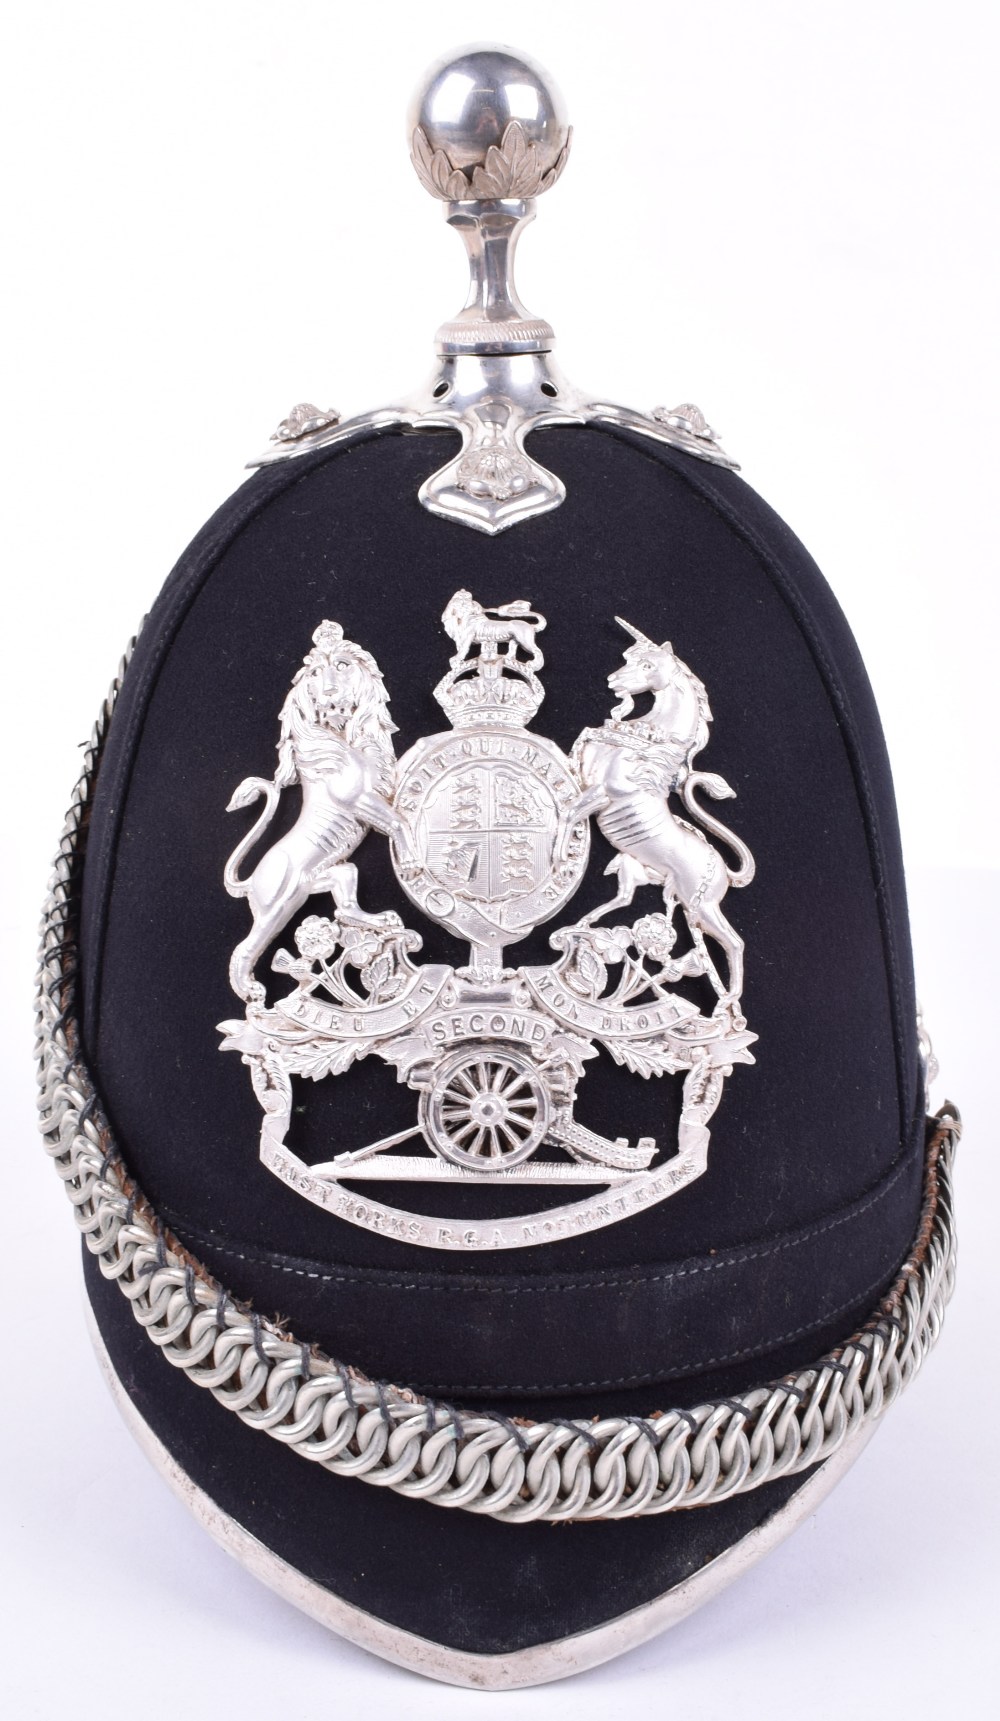 Post 1902 2nd East Yorks Royal Garrison Artillery Volunteers Officers Home Service Helmet - Image 3 of 7